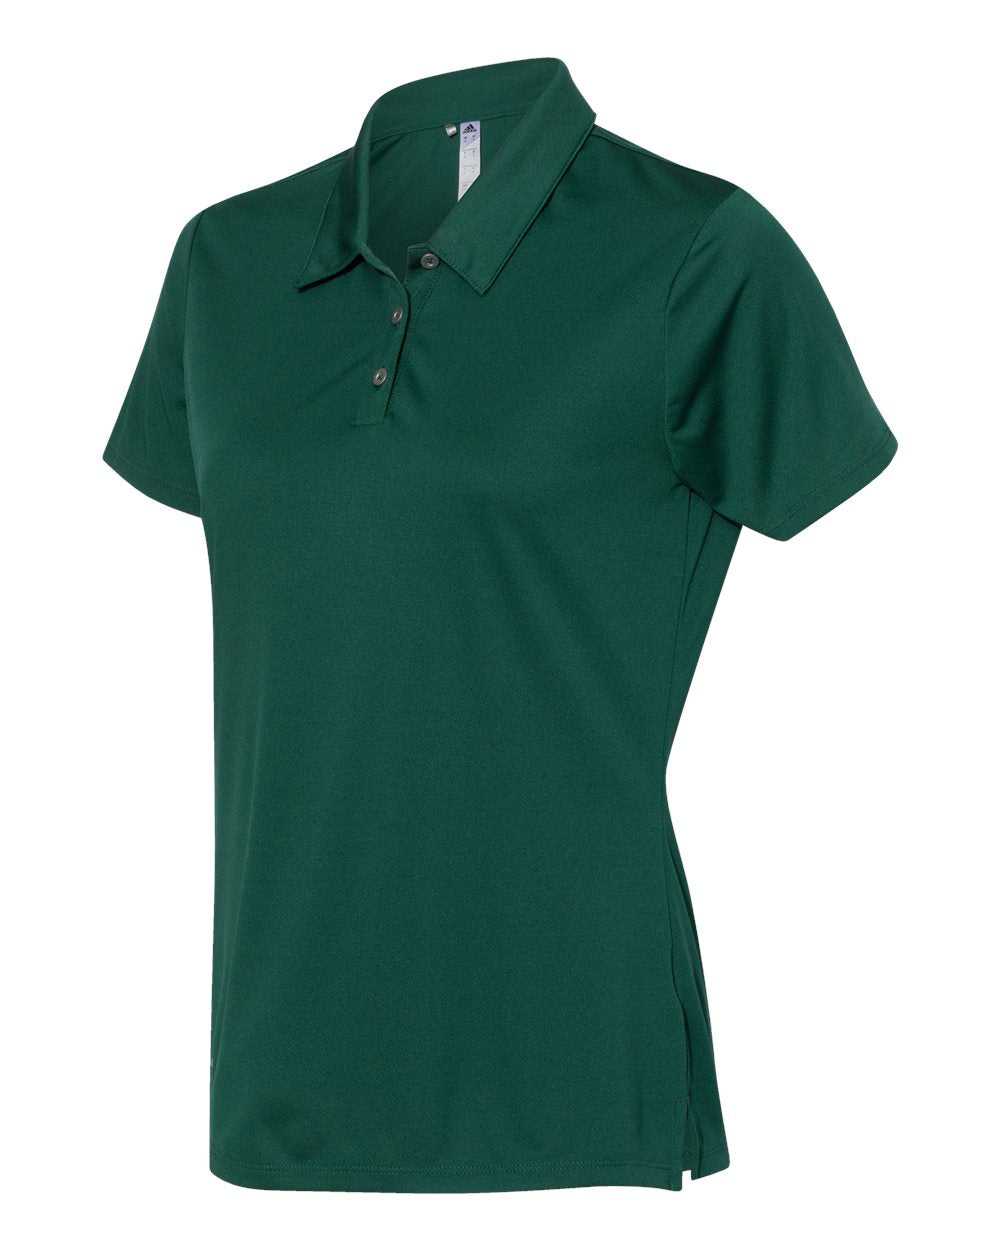 Adidas A231 Women's Performance Sport Shirt - Collegiate Green - HIT a Double